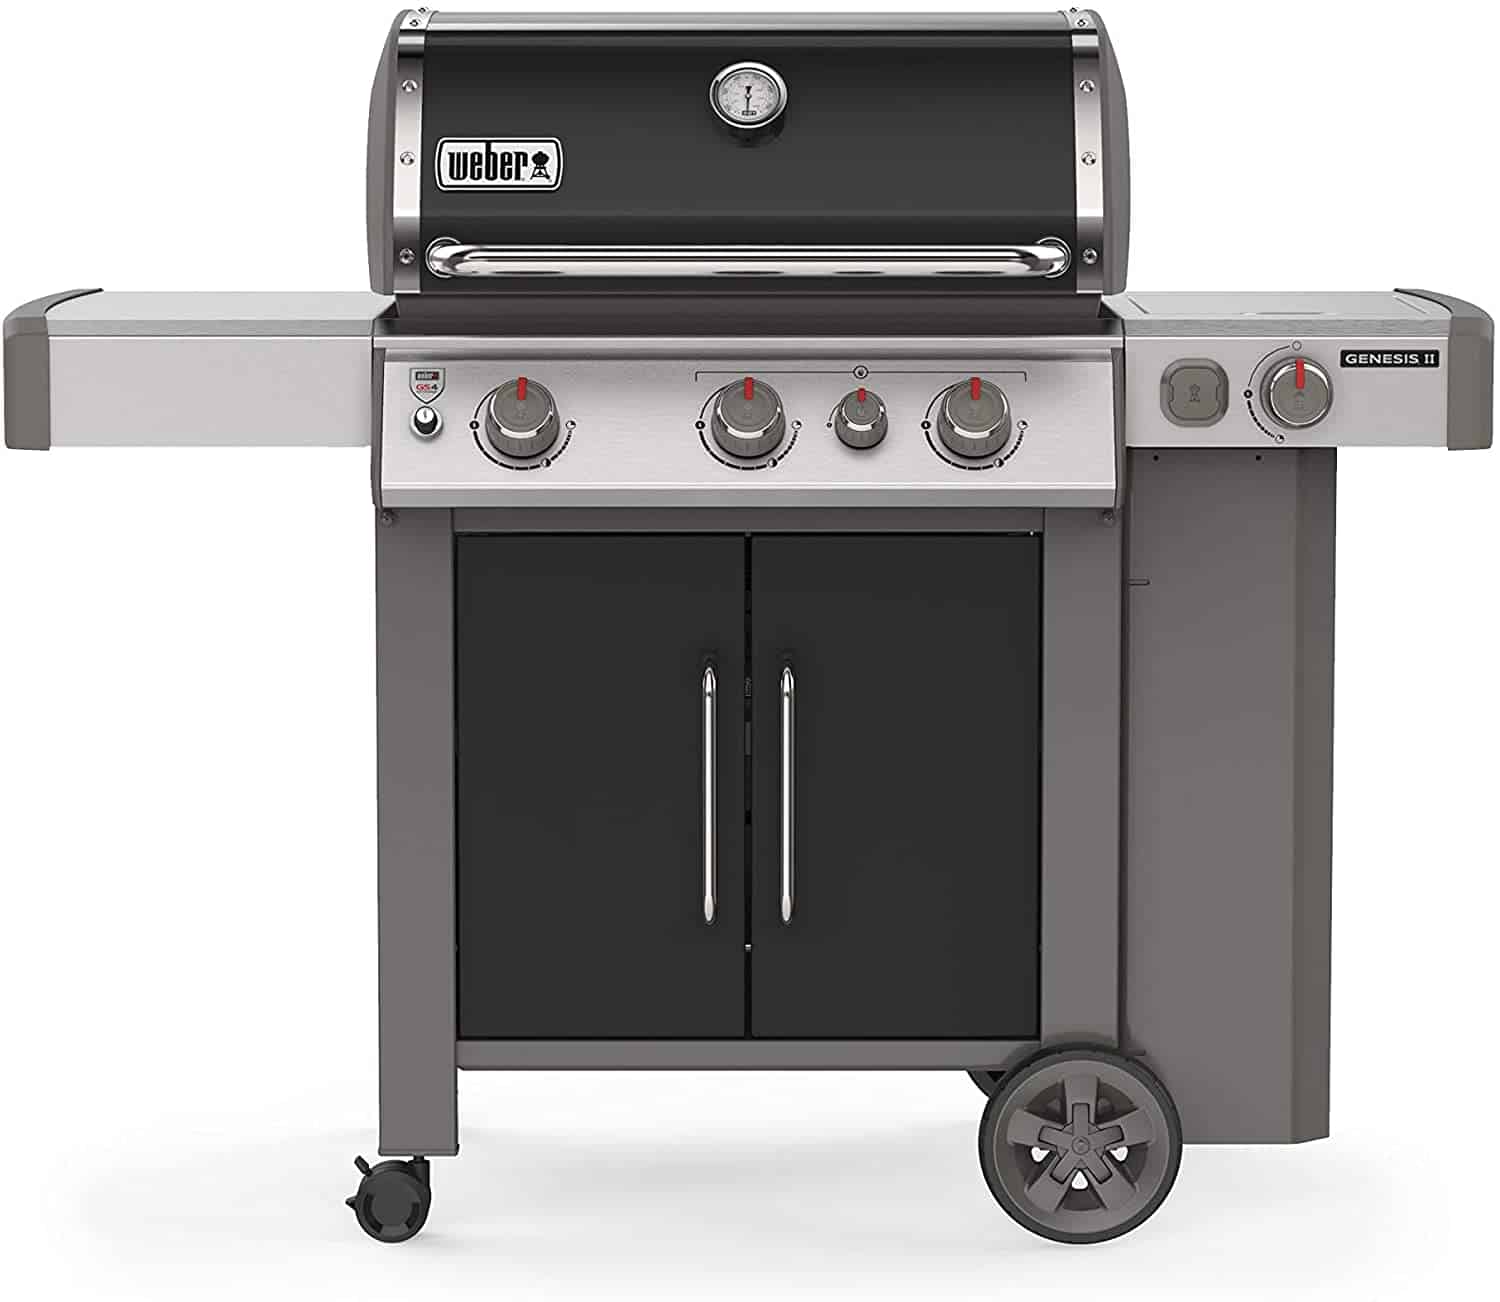 Best 3-burner gas grill for accessories- Weber Genesis II E-335